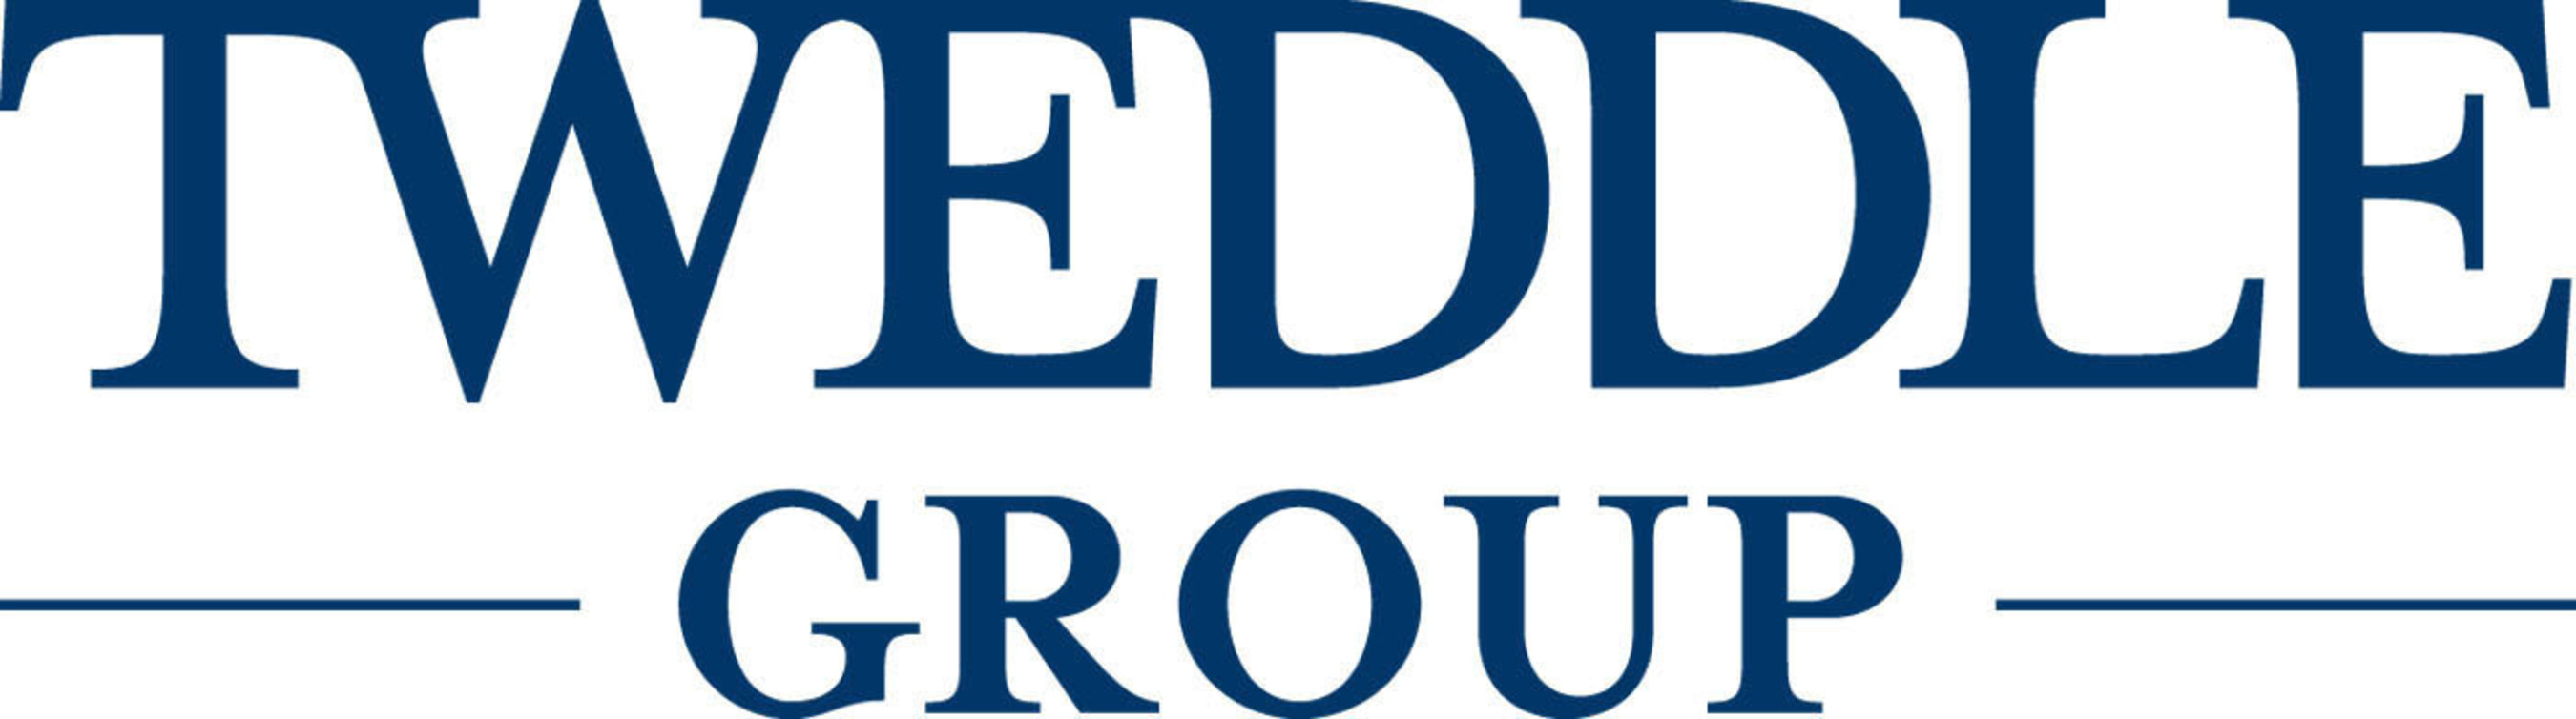 Tweddle Group logo.